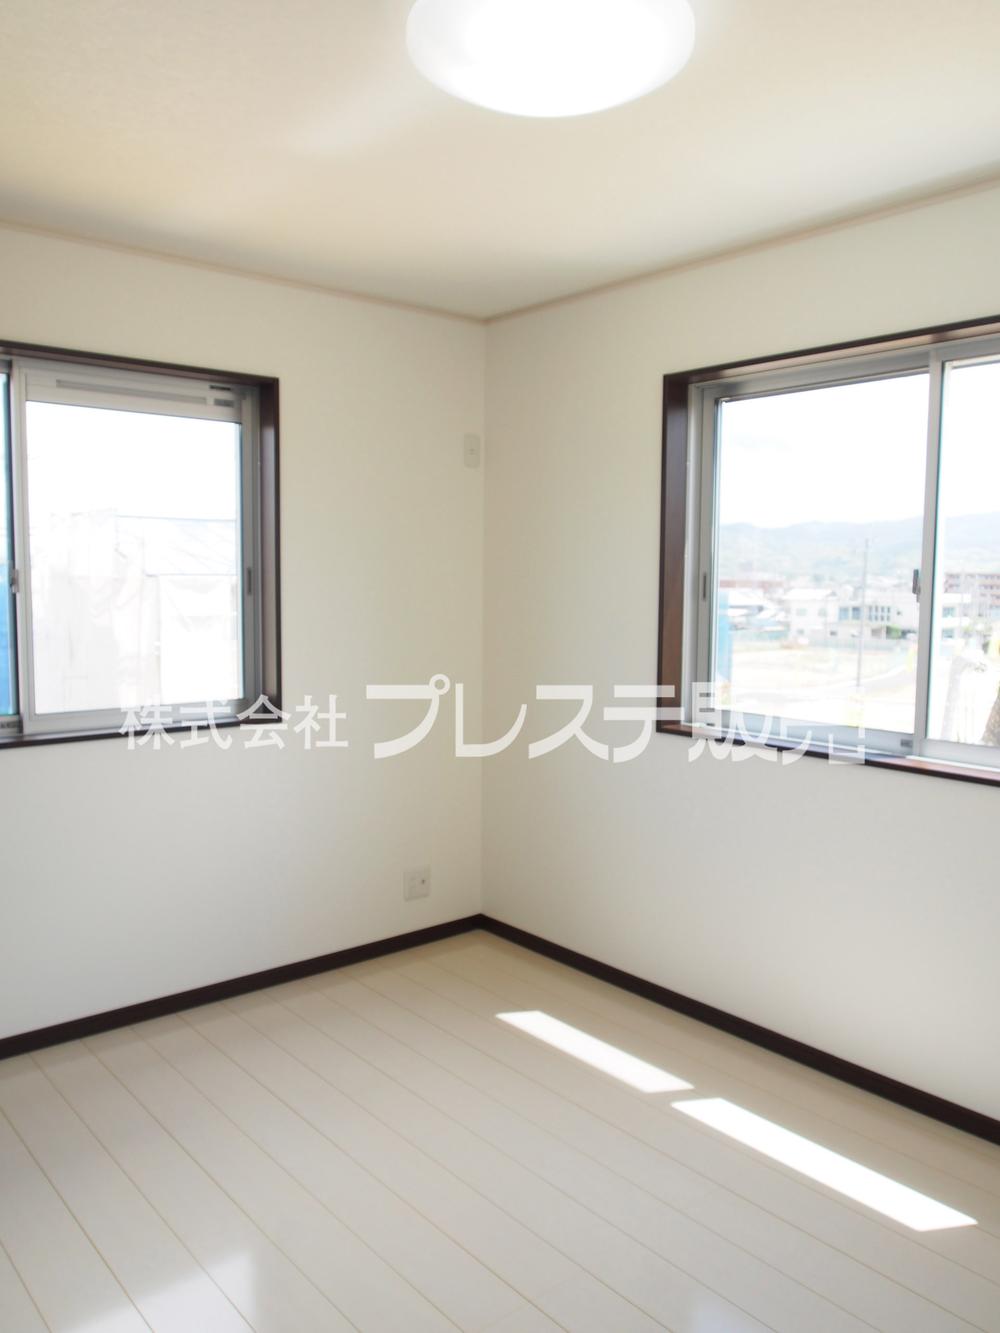 Non-living room. Local photo (No. 10 locations 2 Kaikyoshitsu)